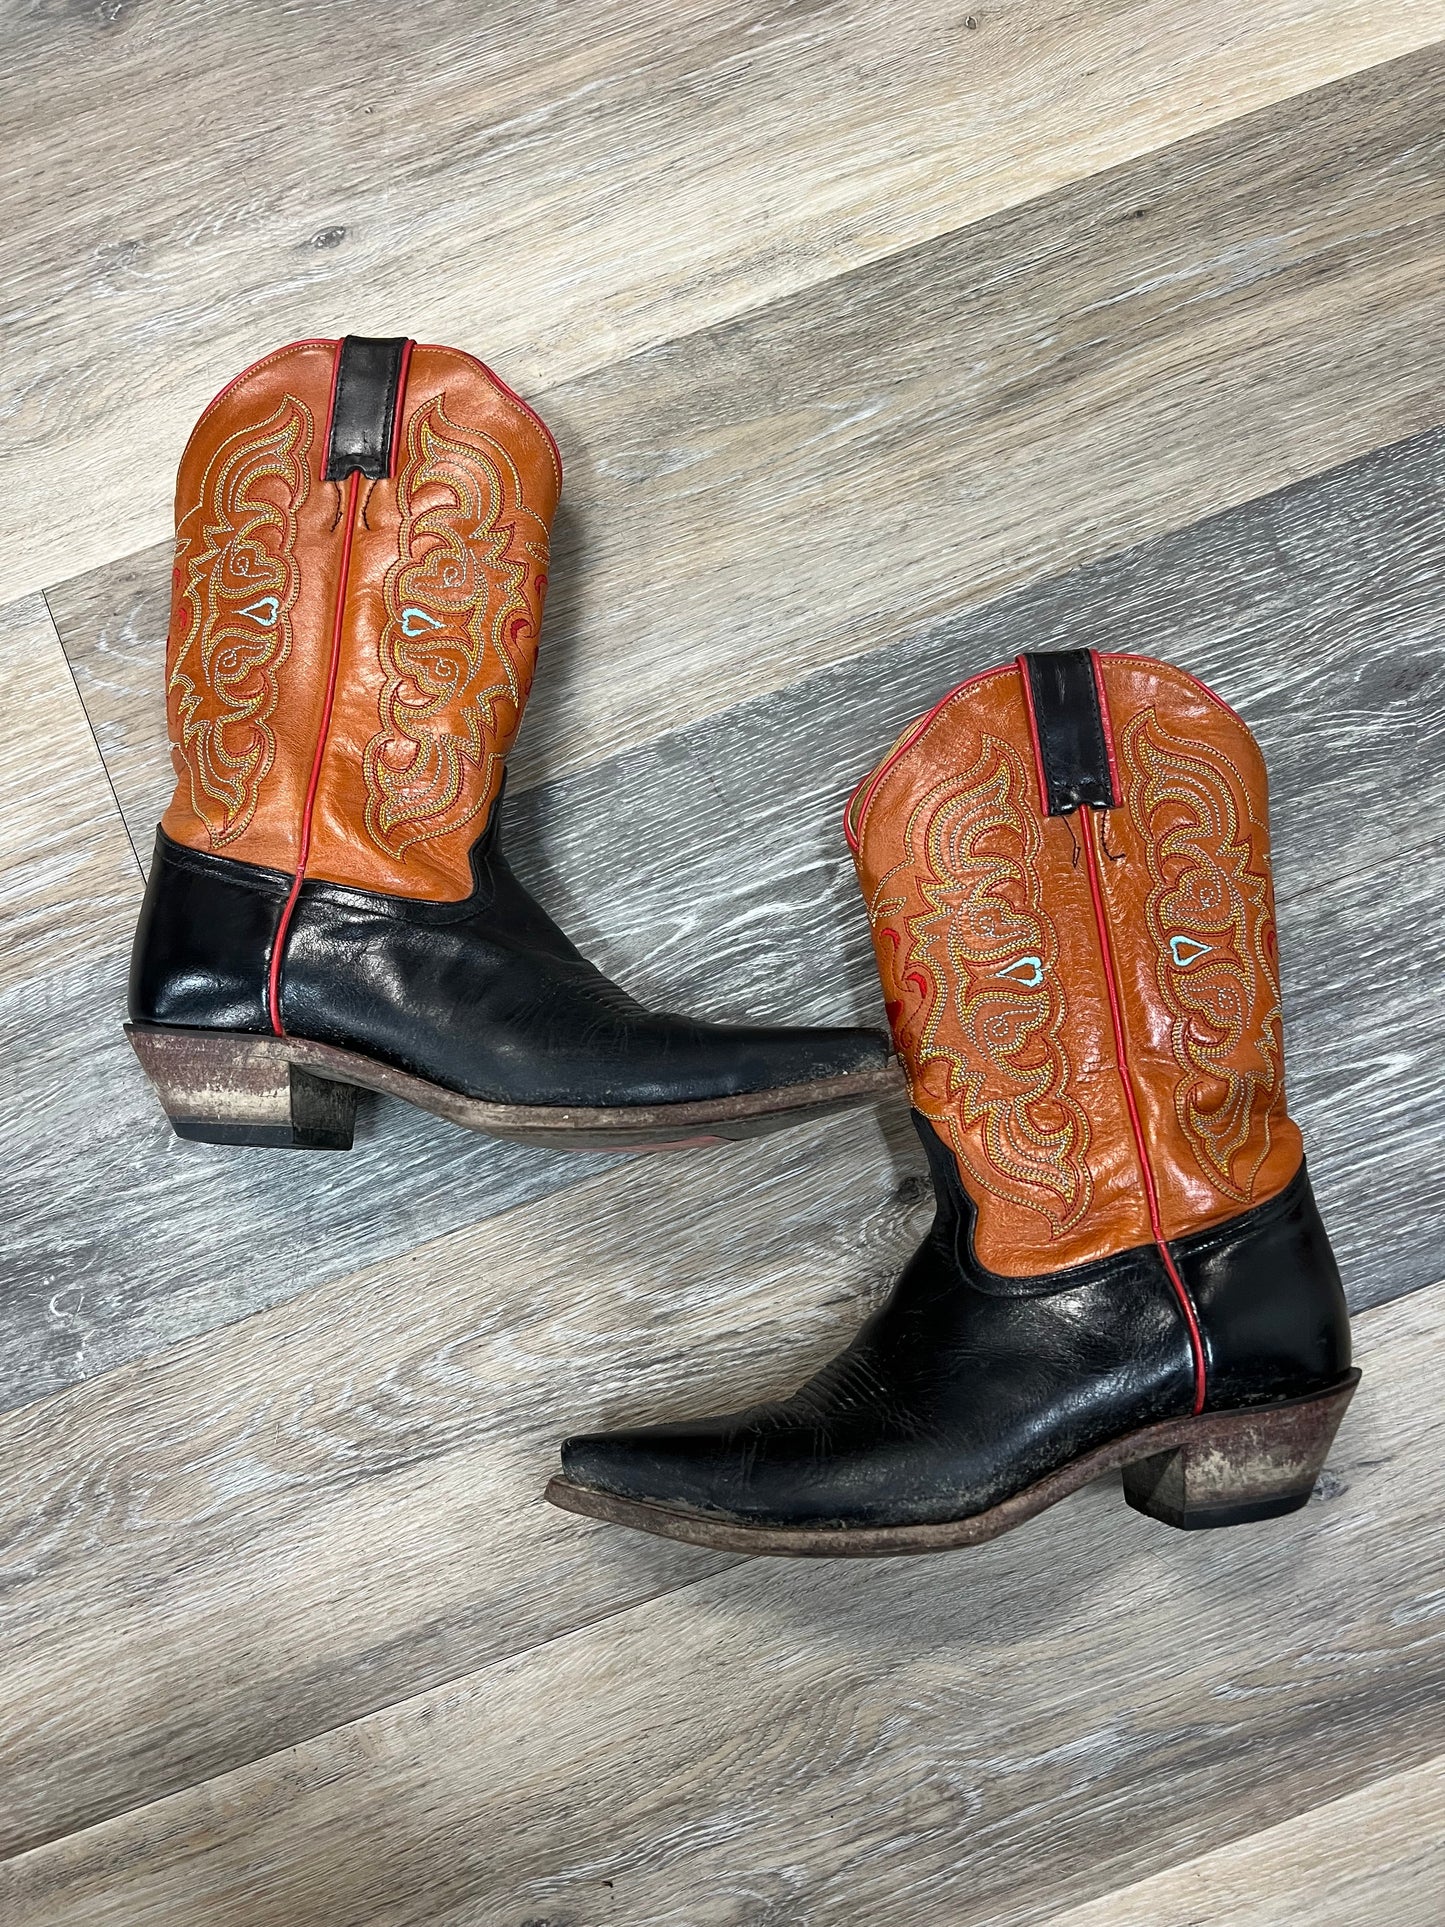 Boots Western By Tony Lama  Size: 8